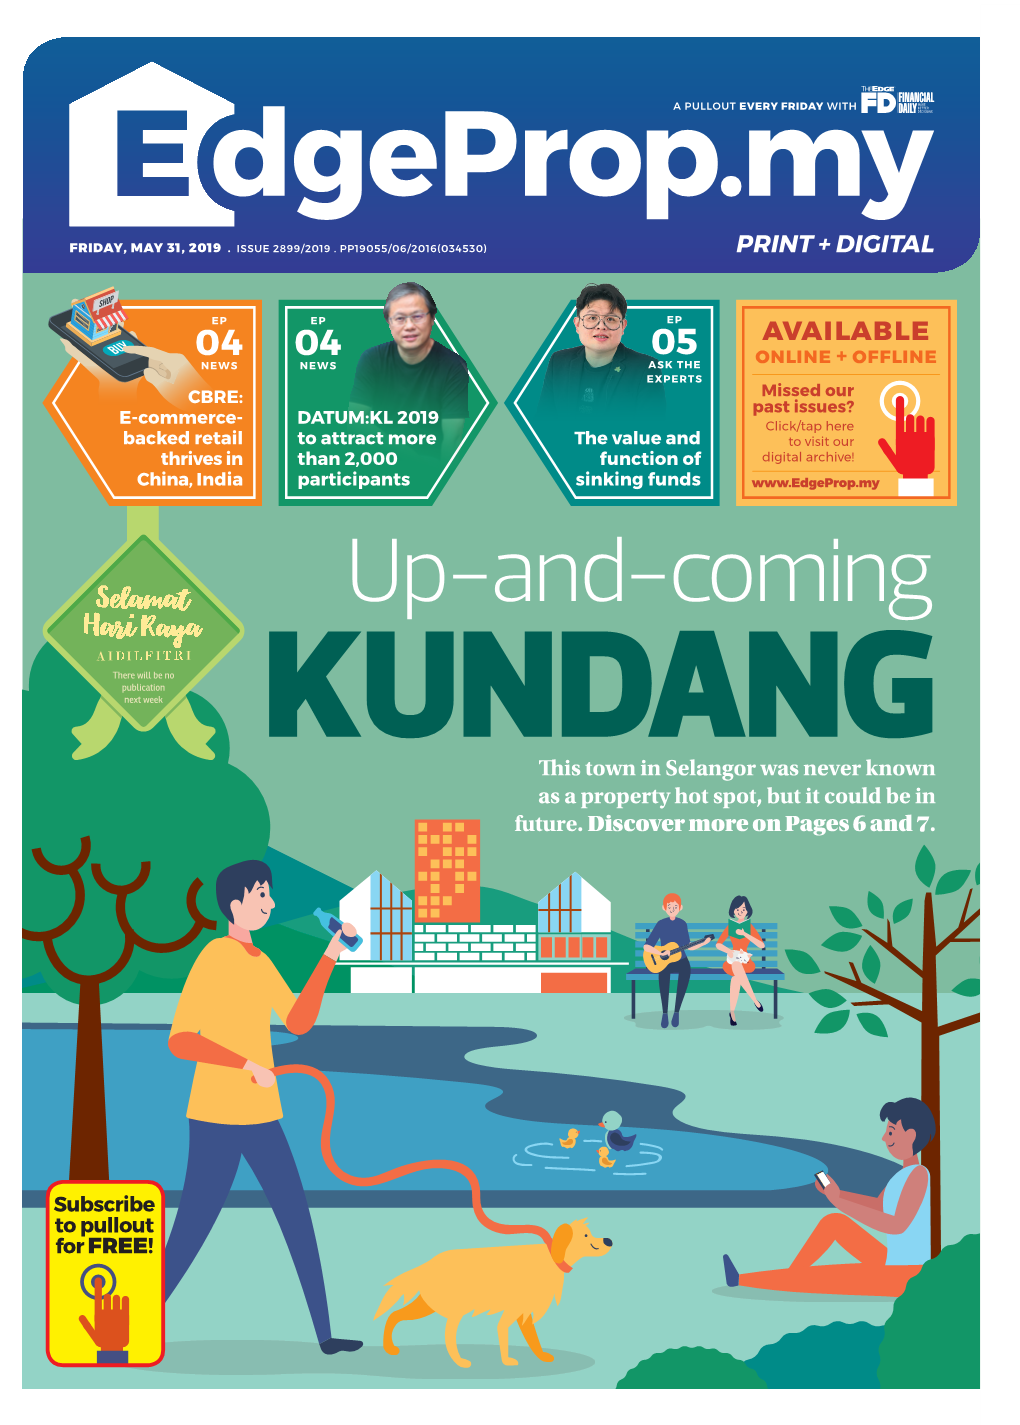 Kundang Properties — Average Similar to Rawang